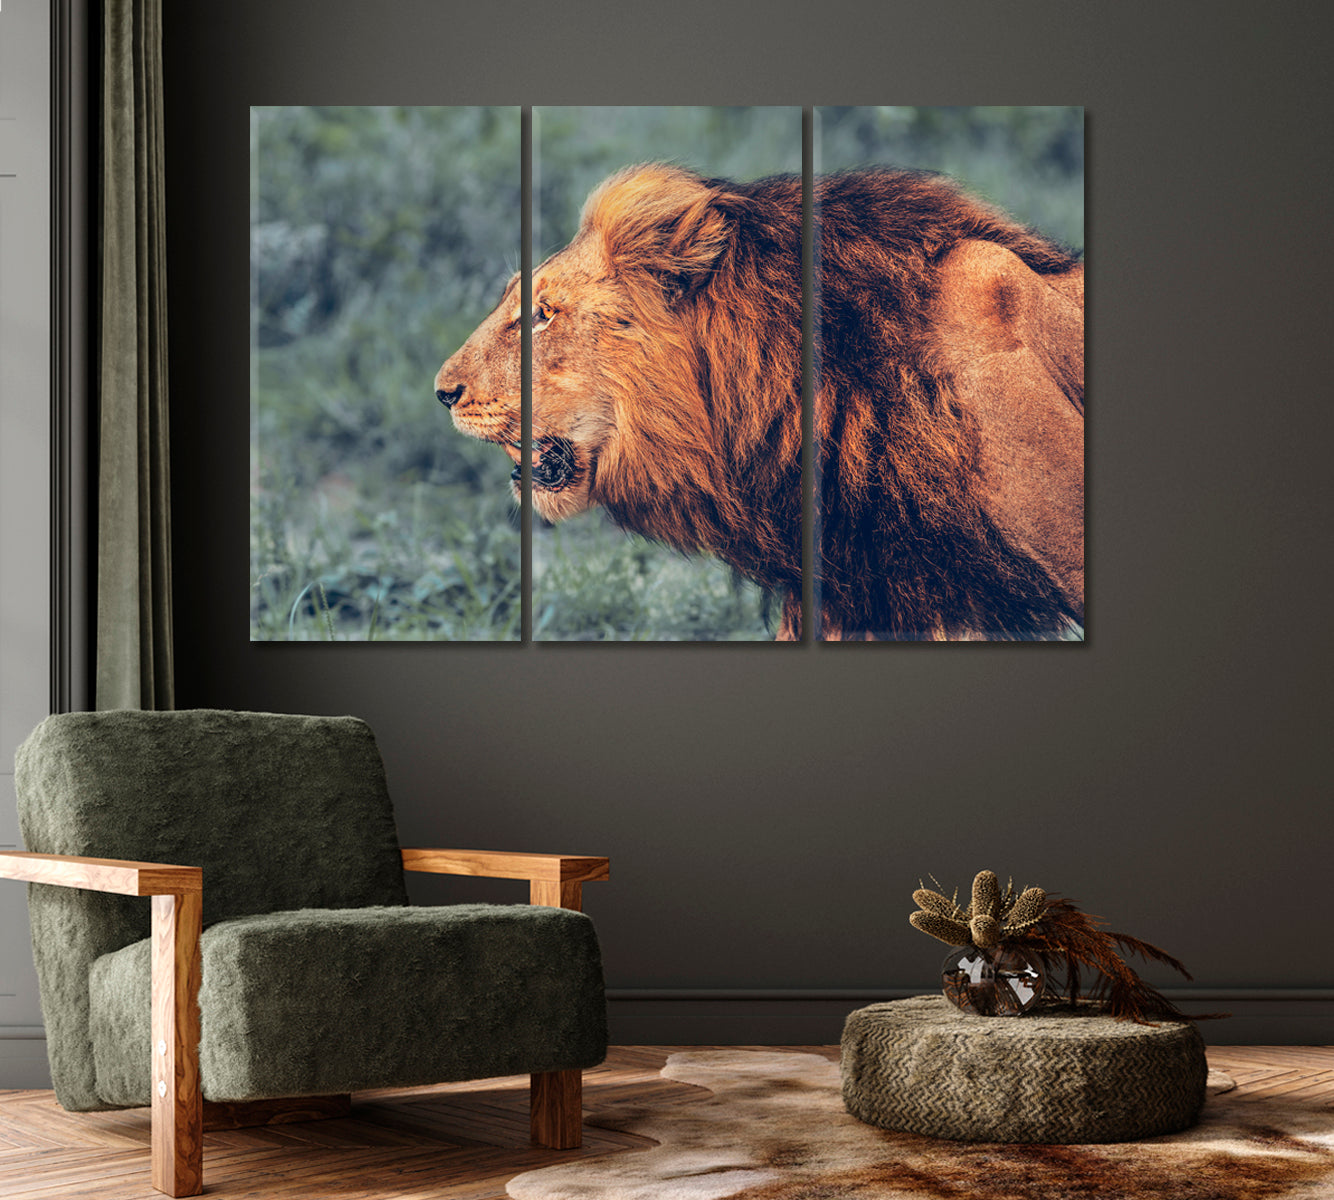 Wild Roaring Lion Canvas Print-Canvas Print-CetArt-1 Panel-24x16 inches-CetArt